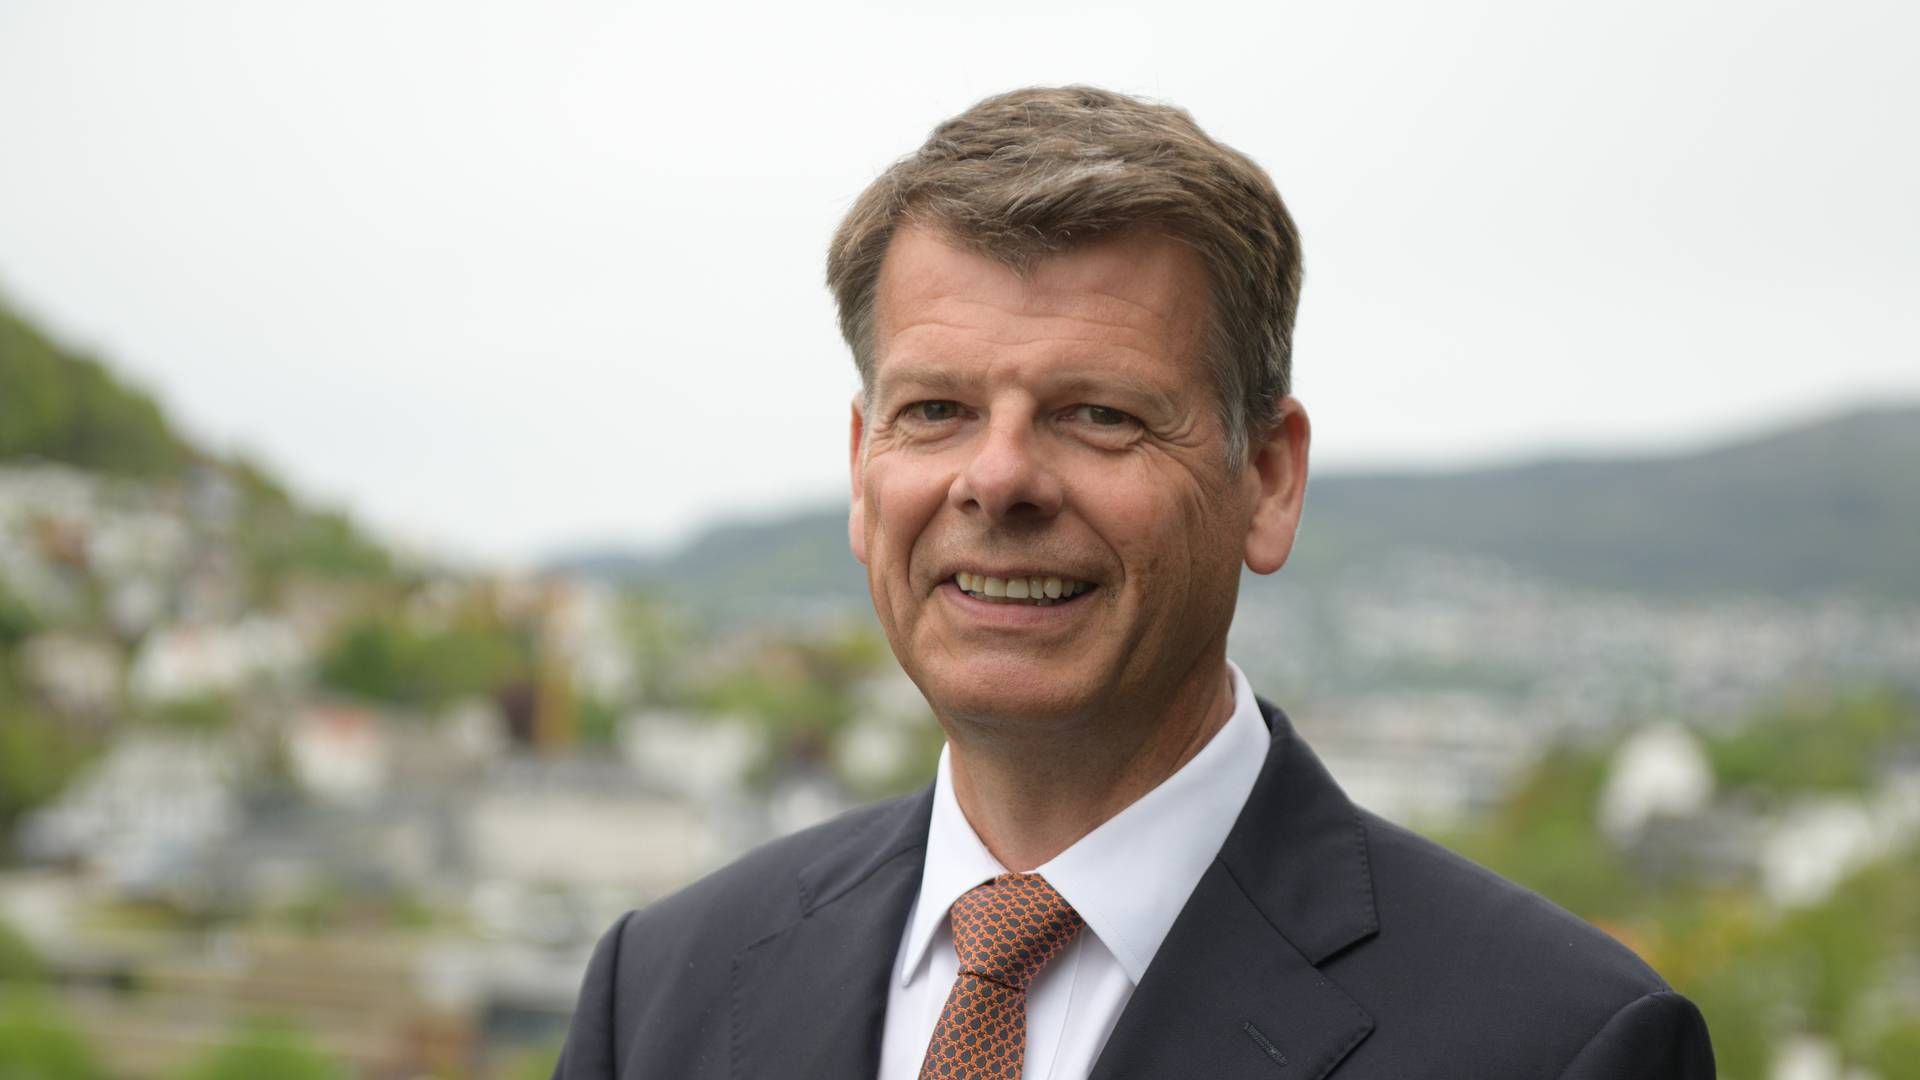 Harald Fotland is chief executive of Odfjell. | Photo: Gunnar Eide / Odfjell